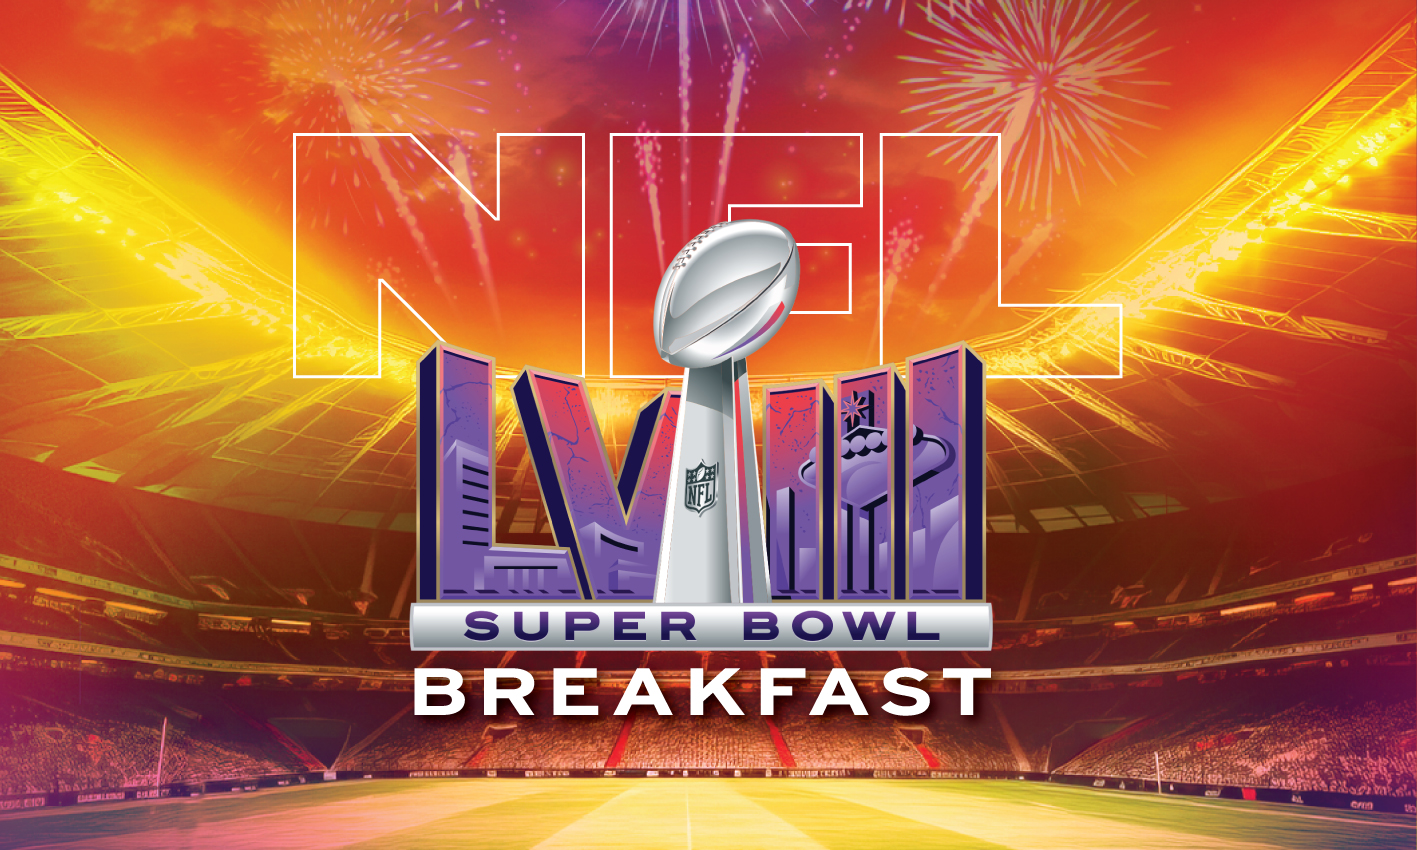 Super Bowl Breakfast